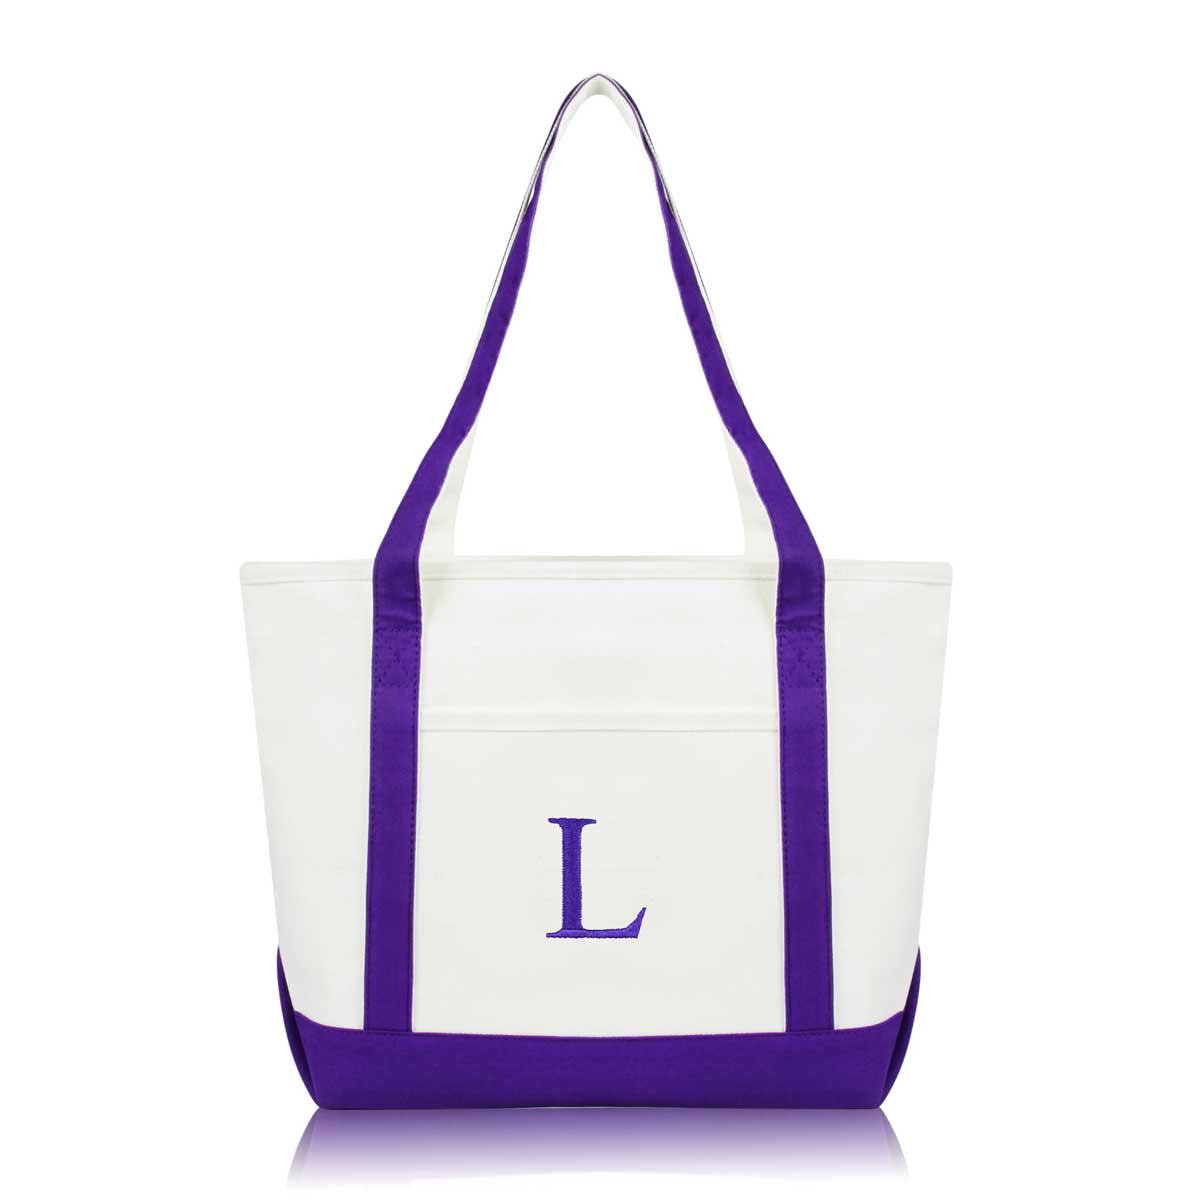 Dalix Medium Personalized Tote Bag Monogrammed Initial Letter - L